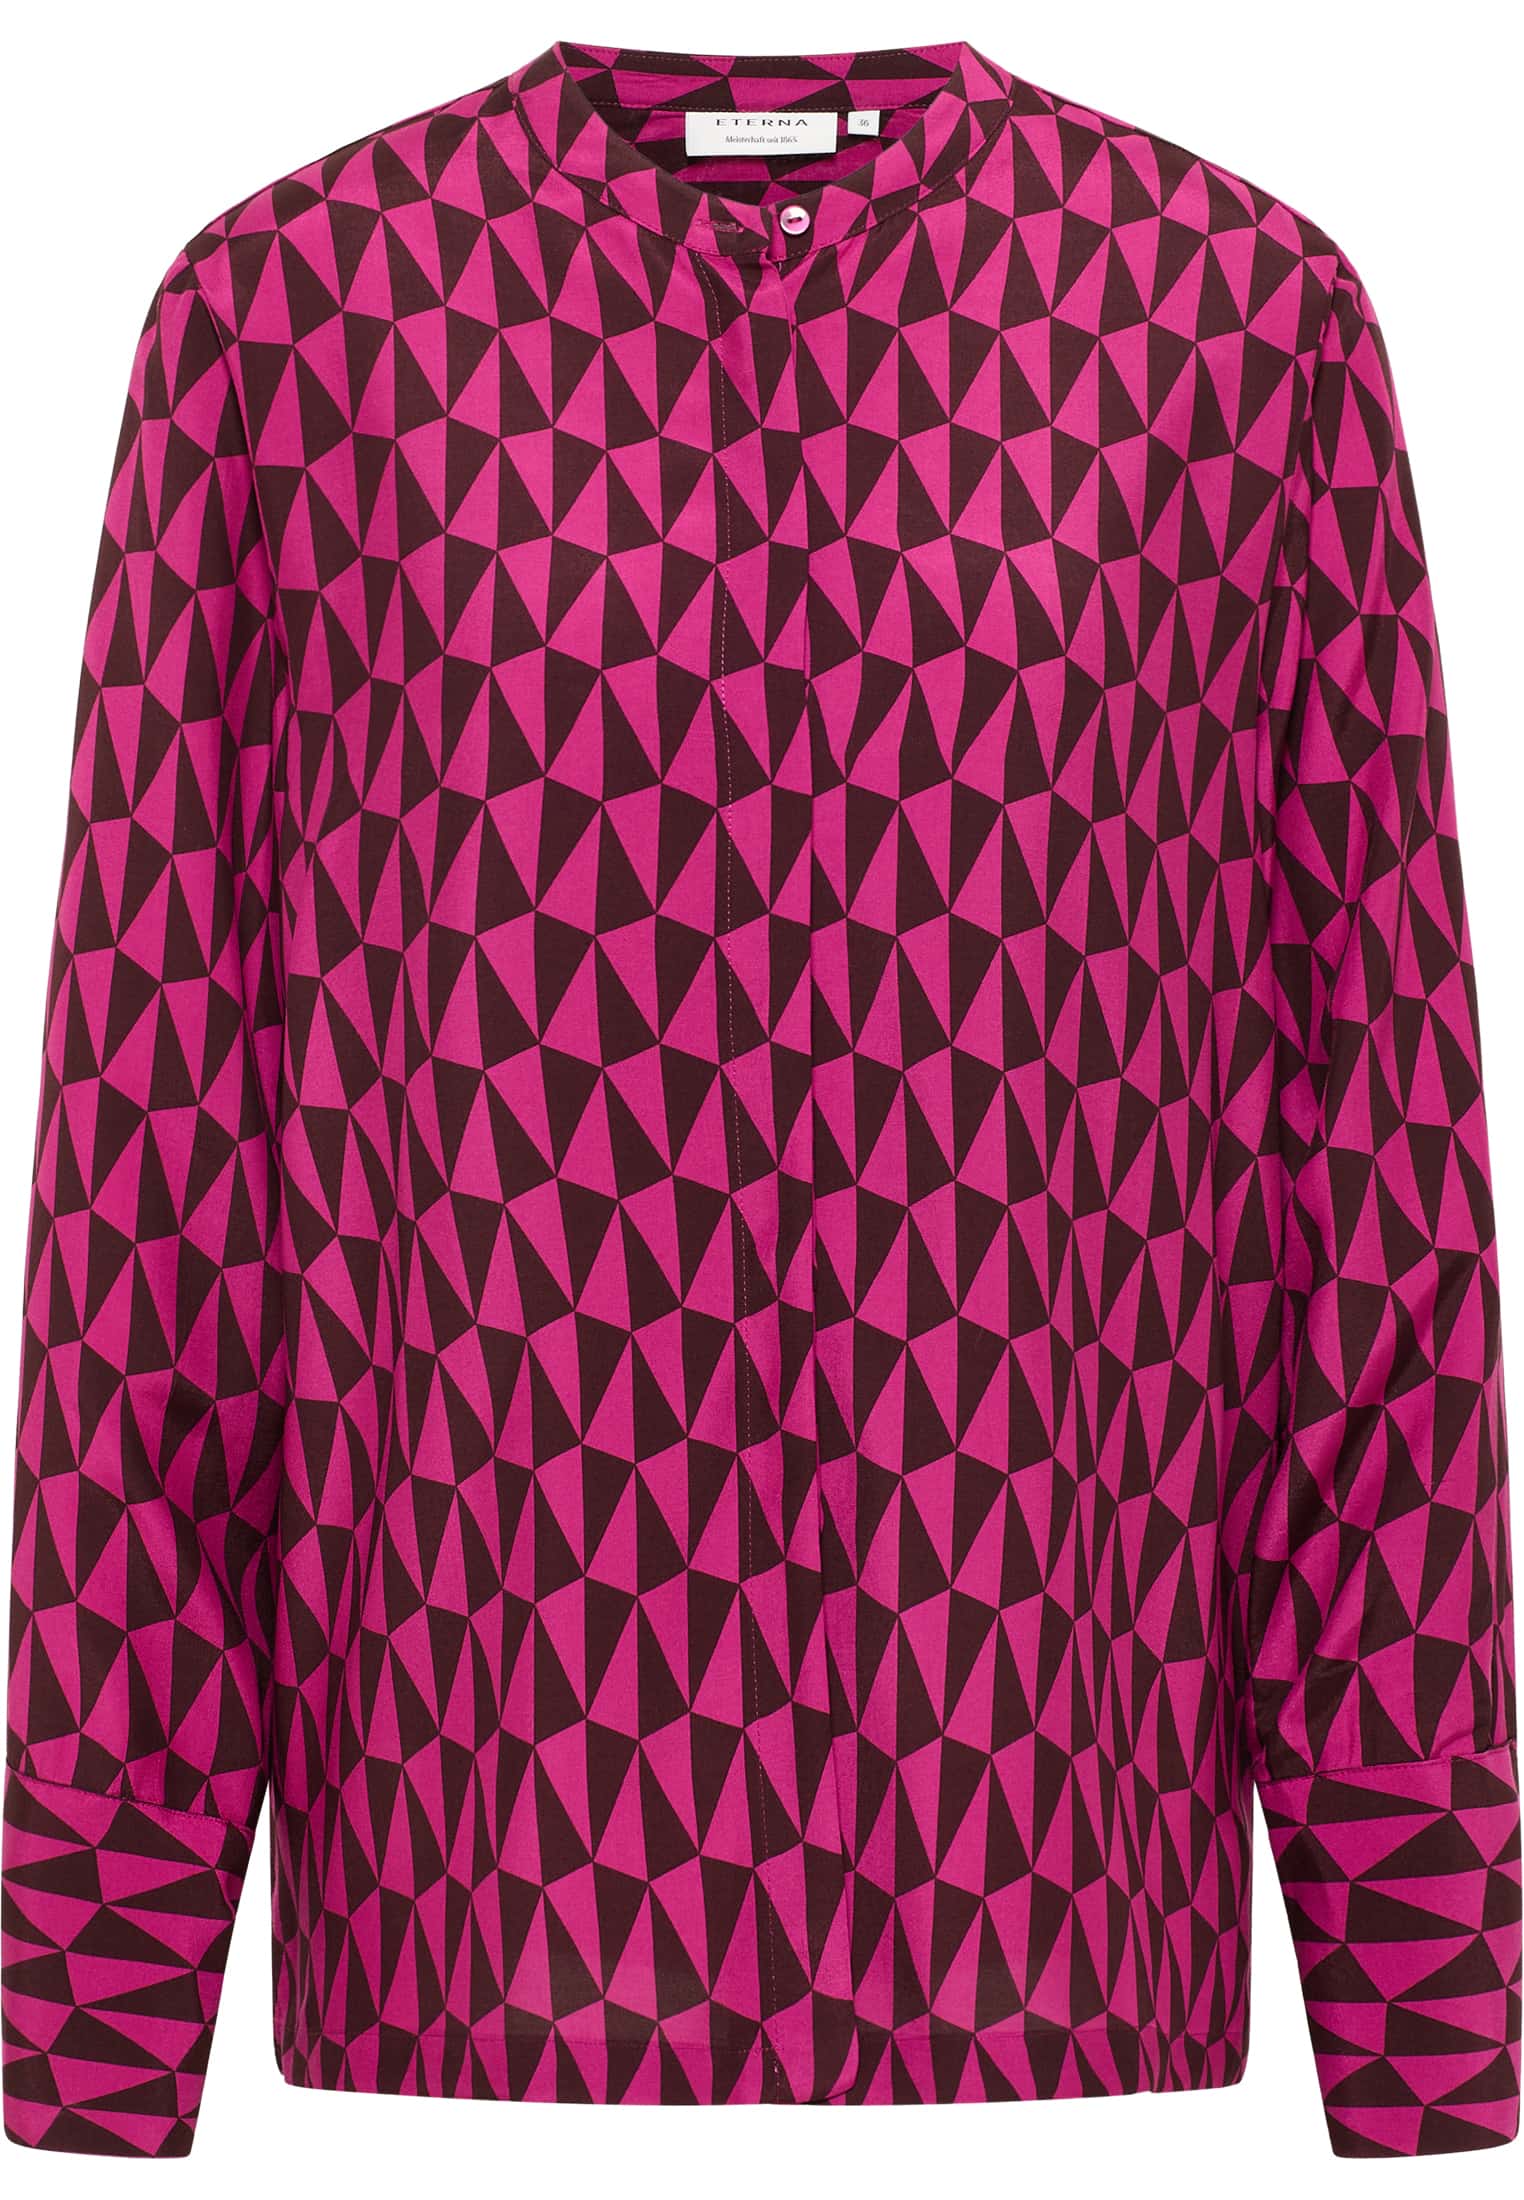 Blusenshirt in pink bedruckt | | Langarm pink | 2BL04250-15-21-42-1/1 42 